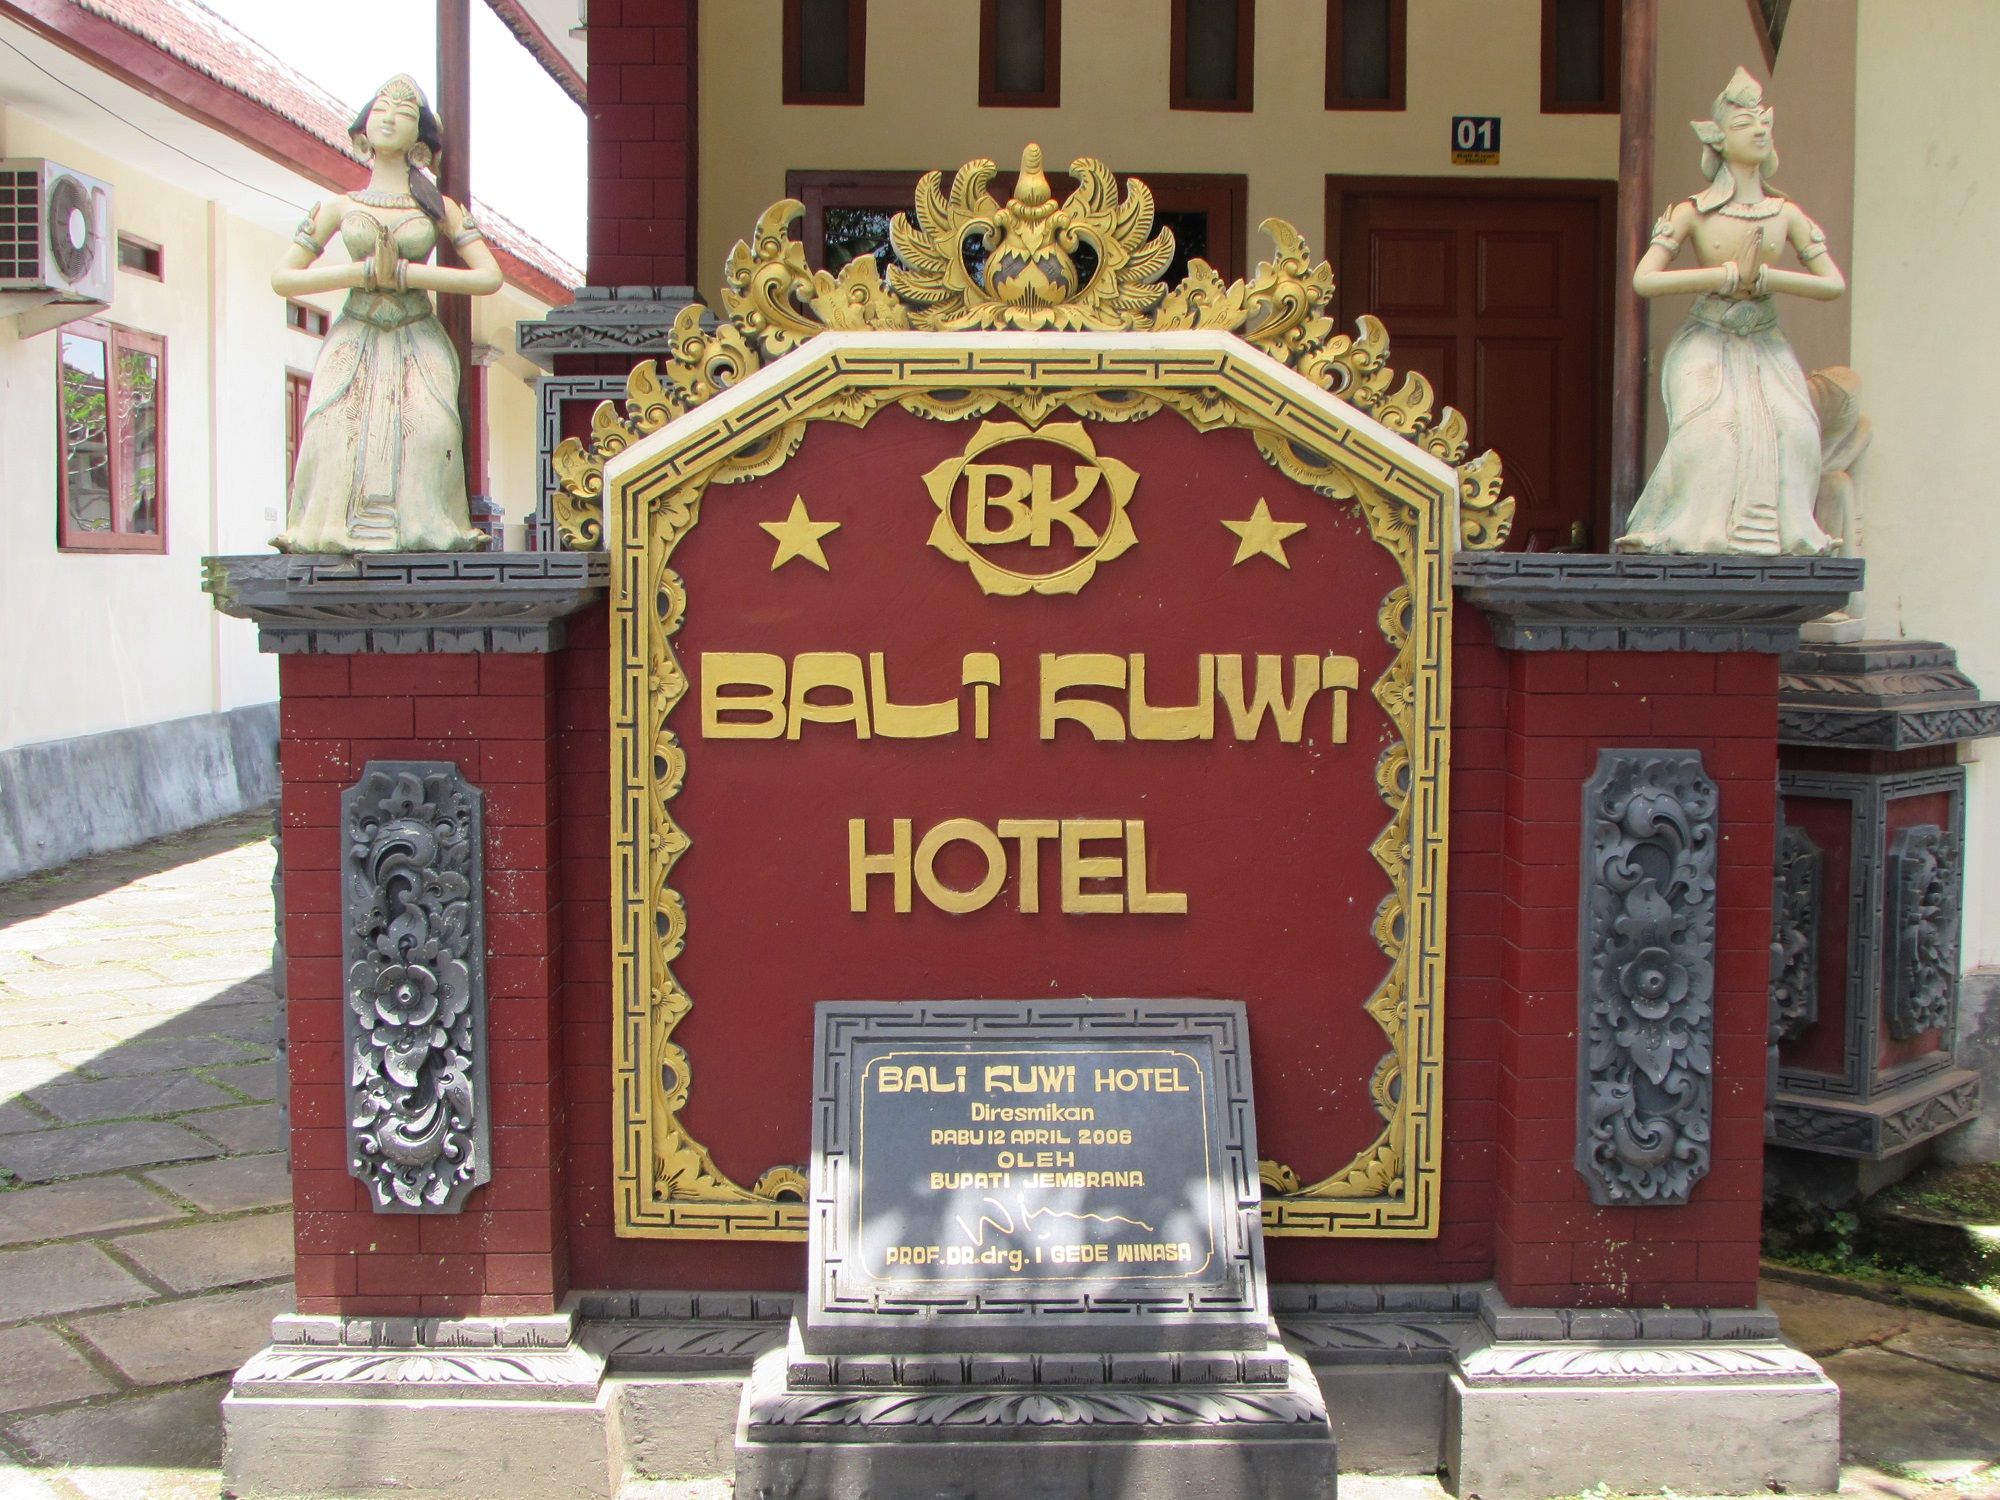 Bali Kuwi Hotel, ₱ 1,008.77